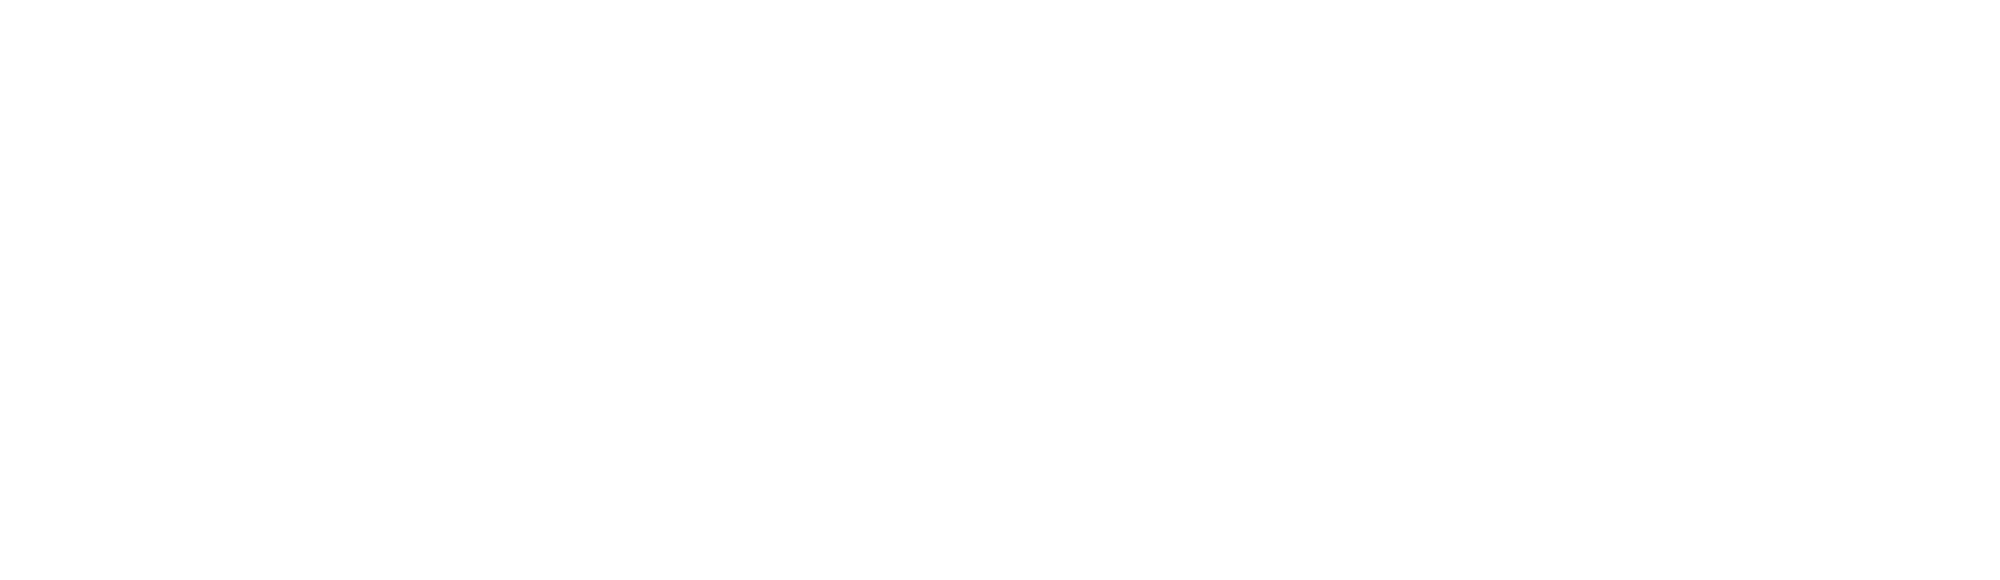 Ask Rabbits